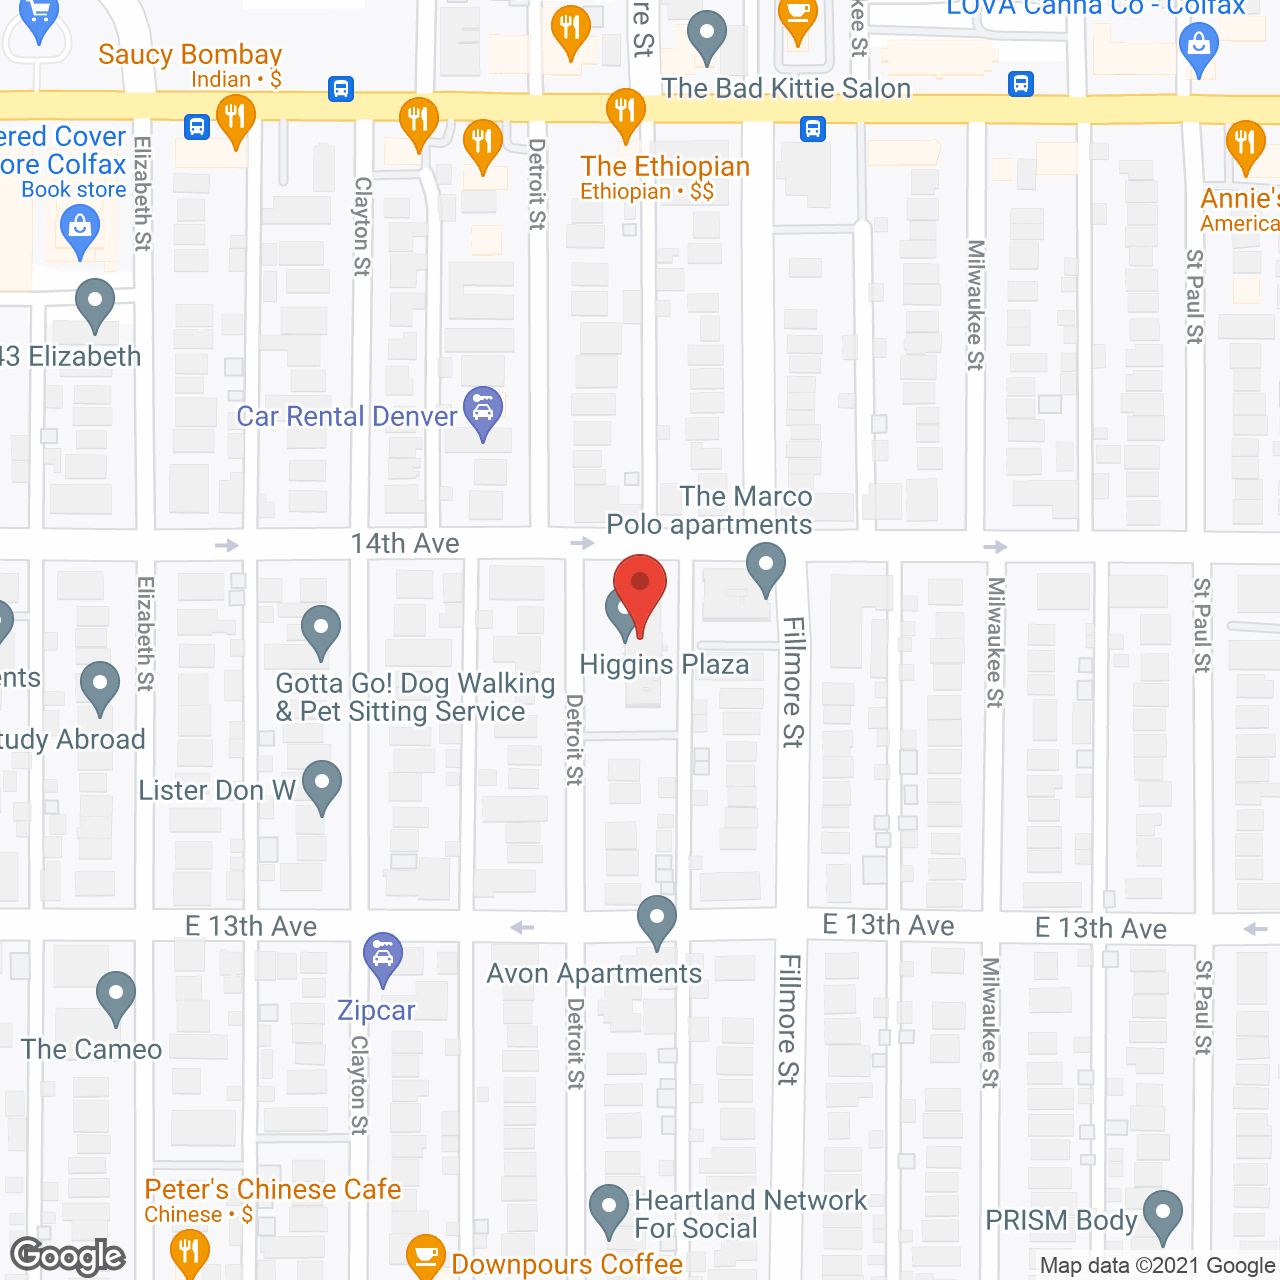 Higgins Plaza in google map